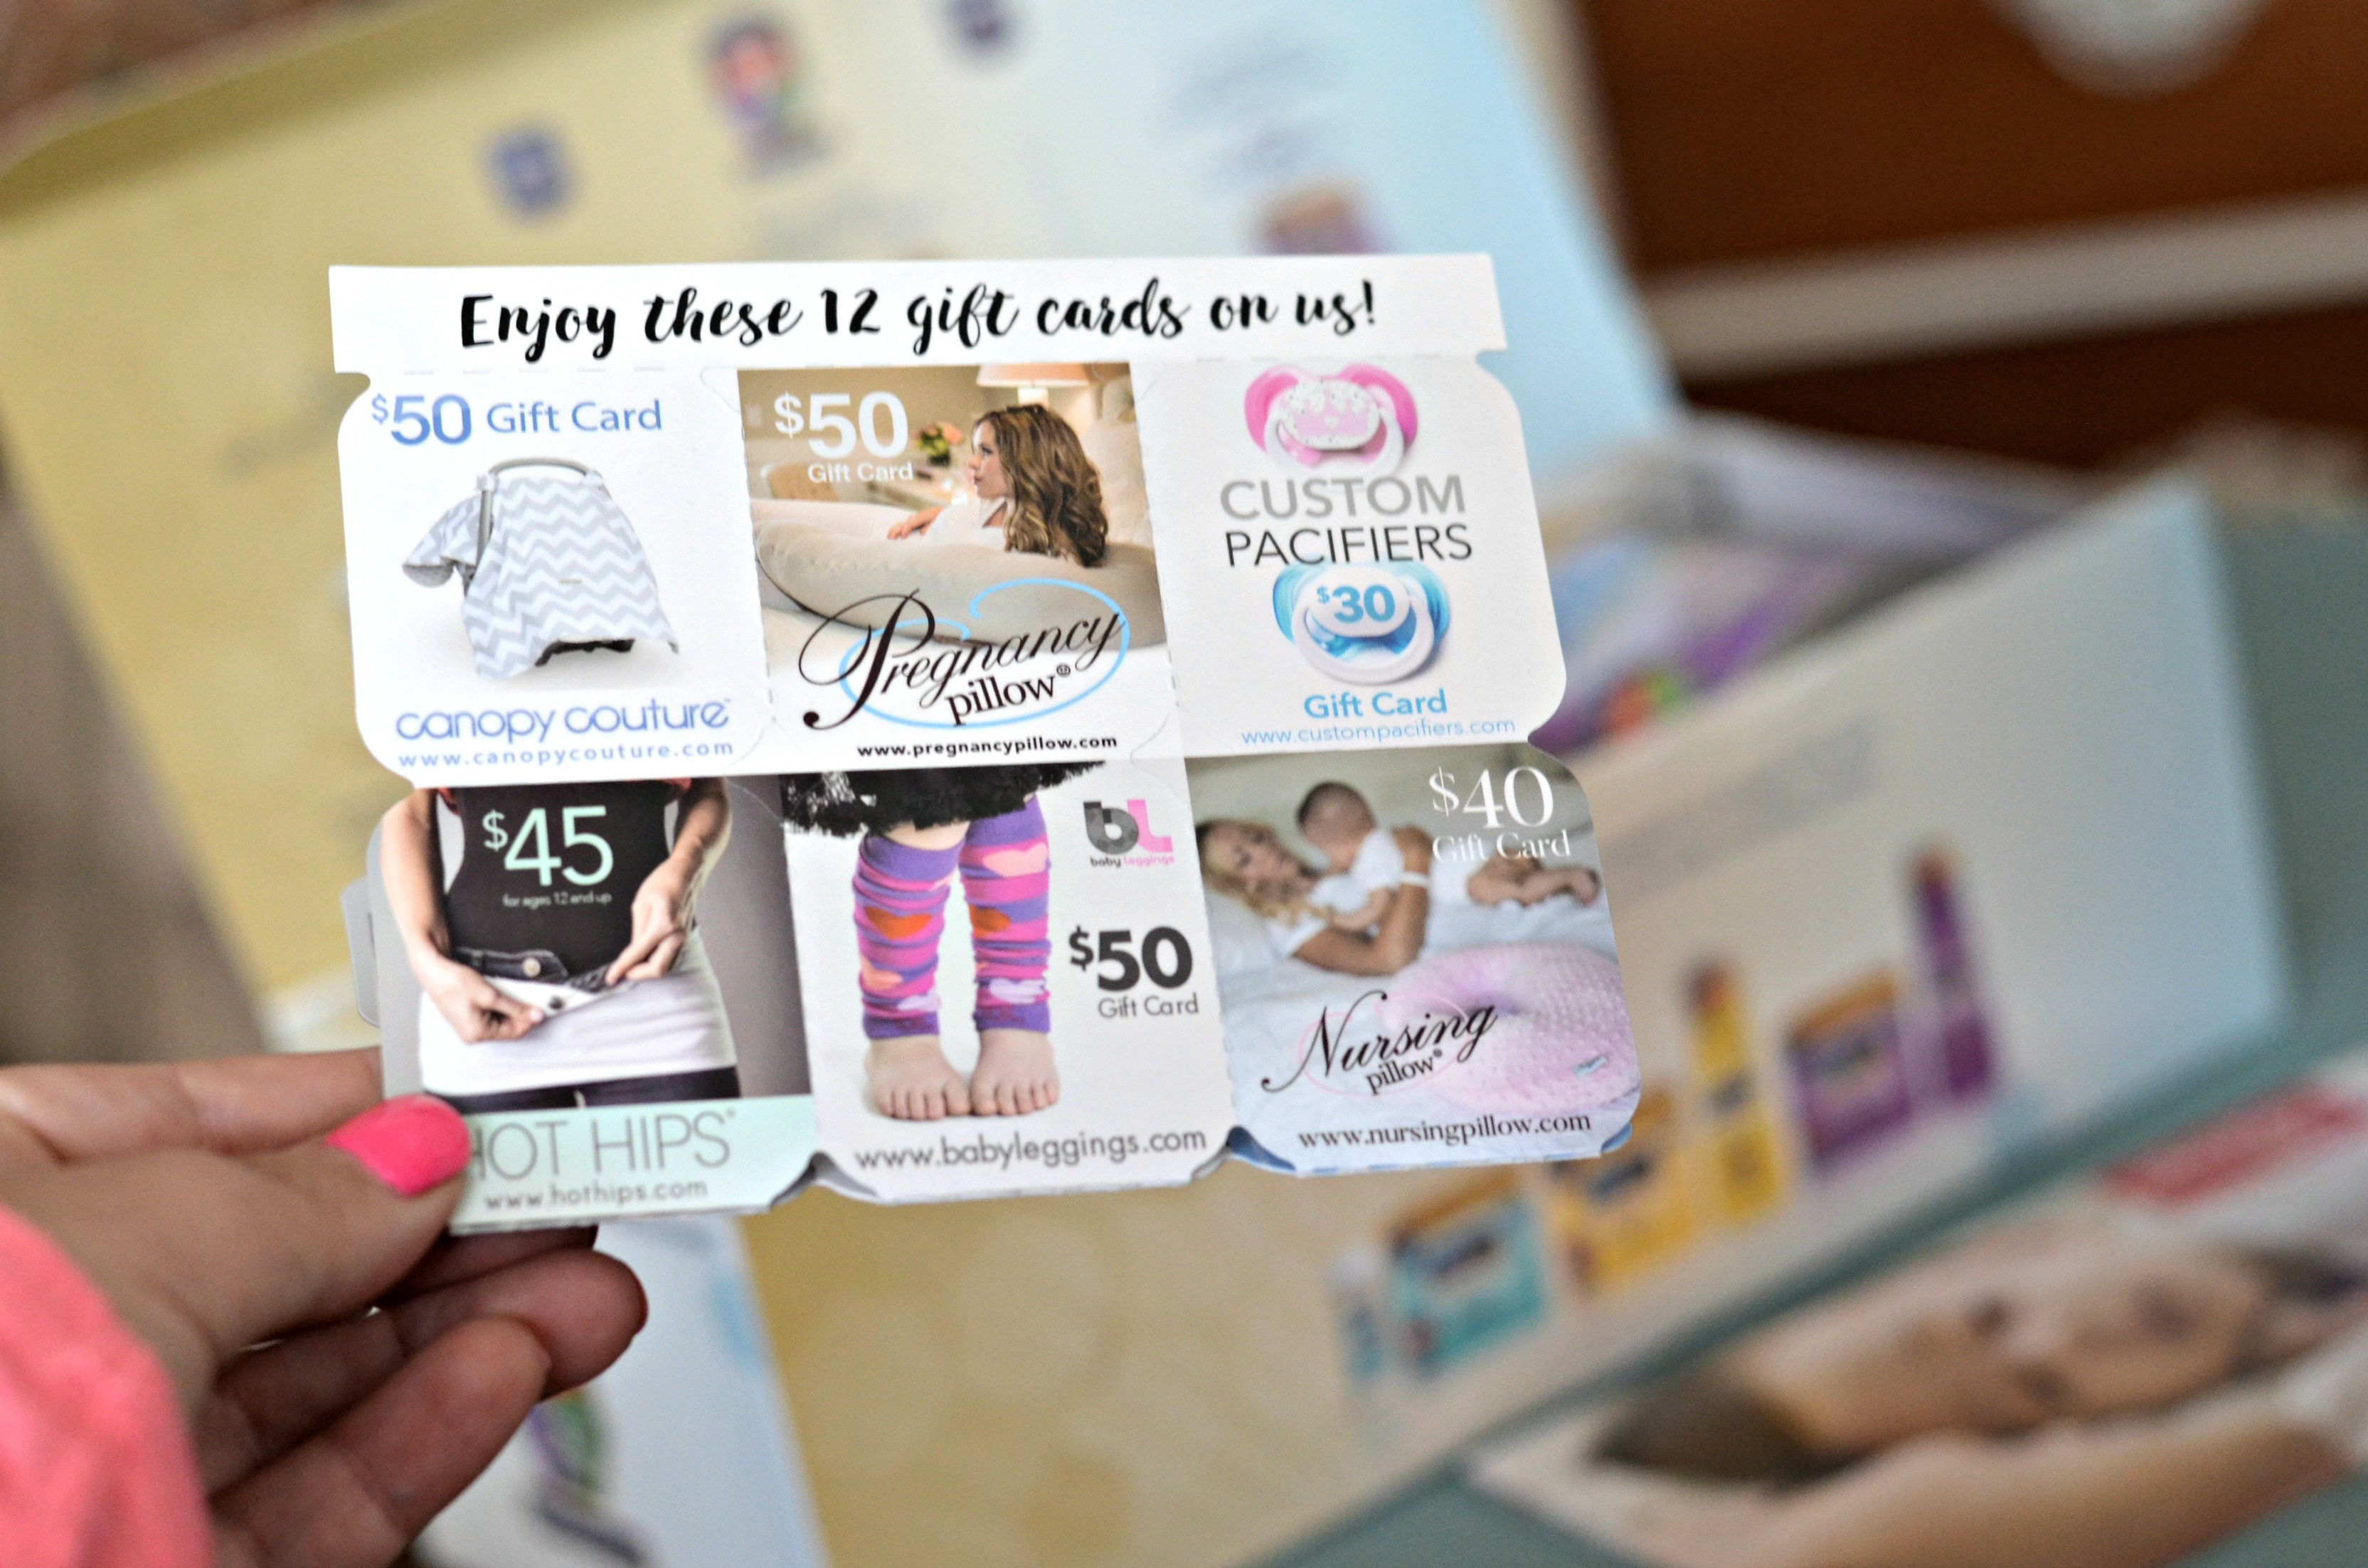 free enfamil baby box - get free enfamil gifts like these Enfamil gift cards